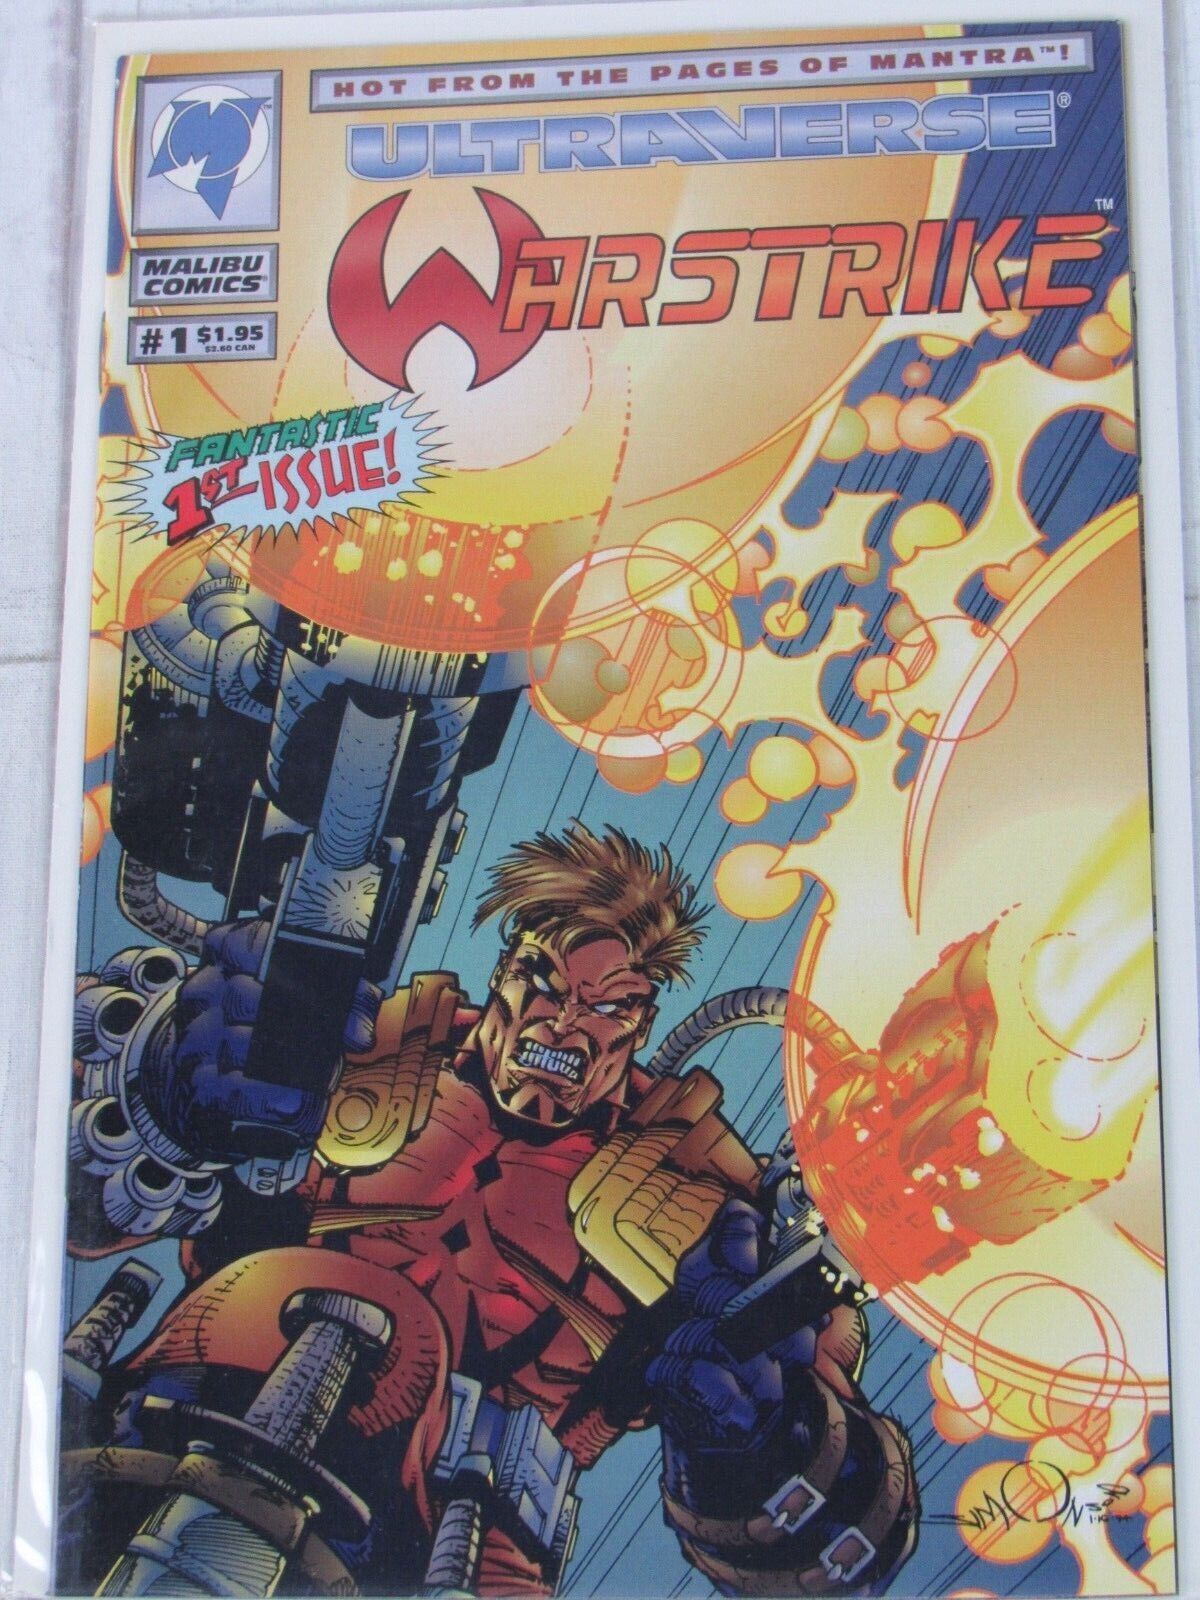 Warstrike #1 May 1994 Malibu Comics